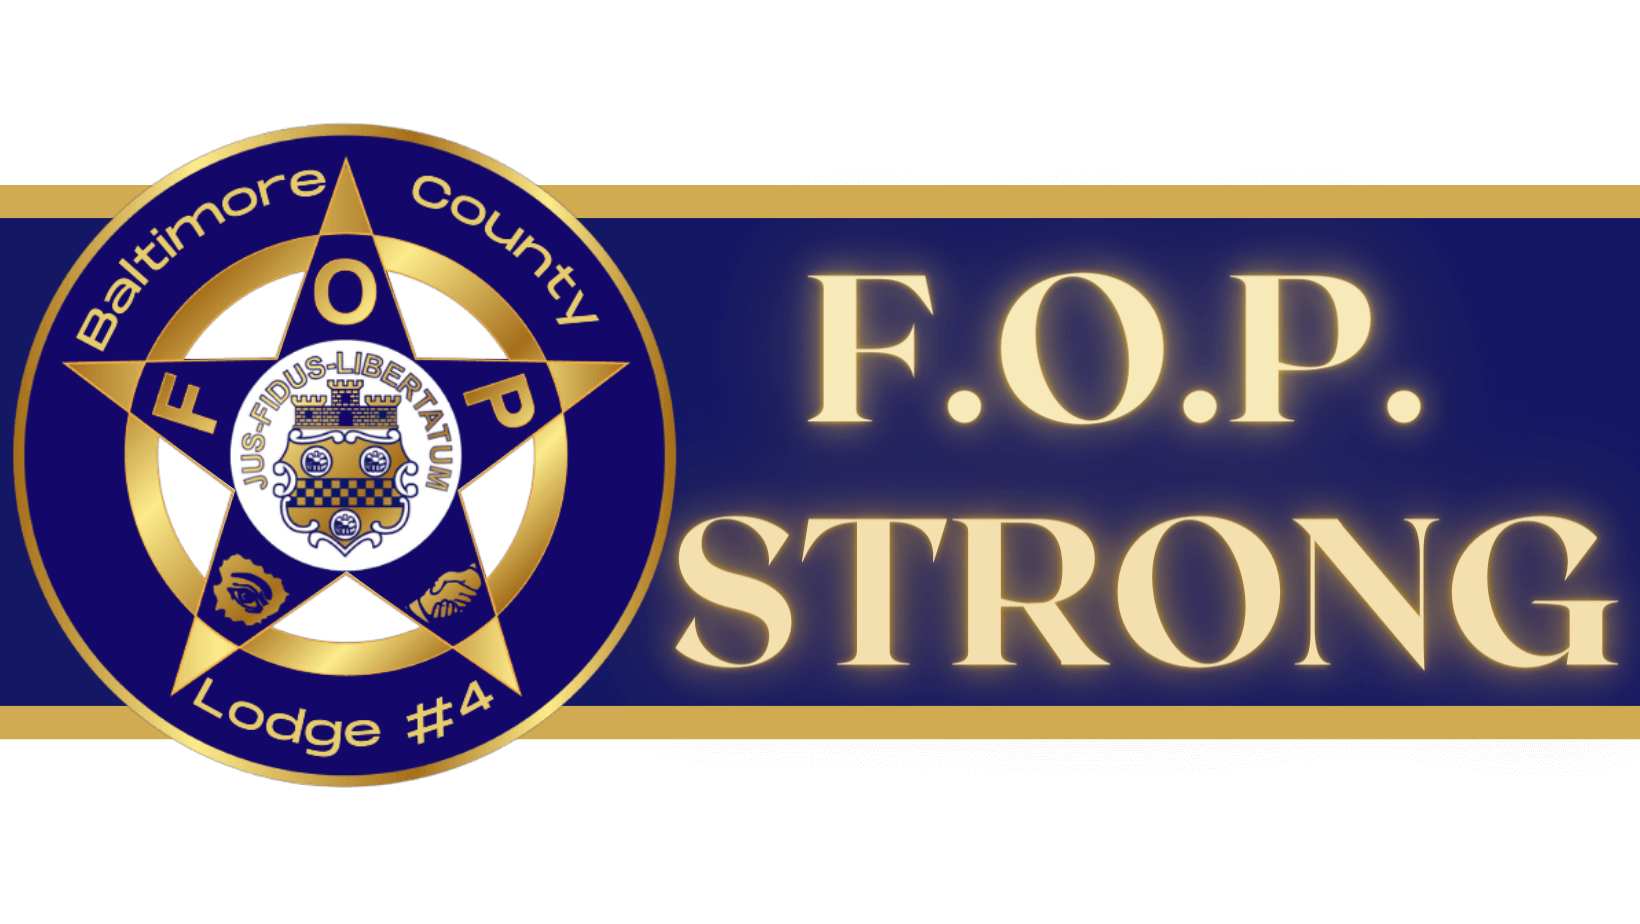 baltimore county lodge #4 F.O.P. Strong logo